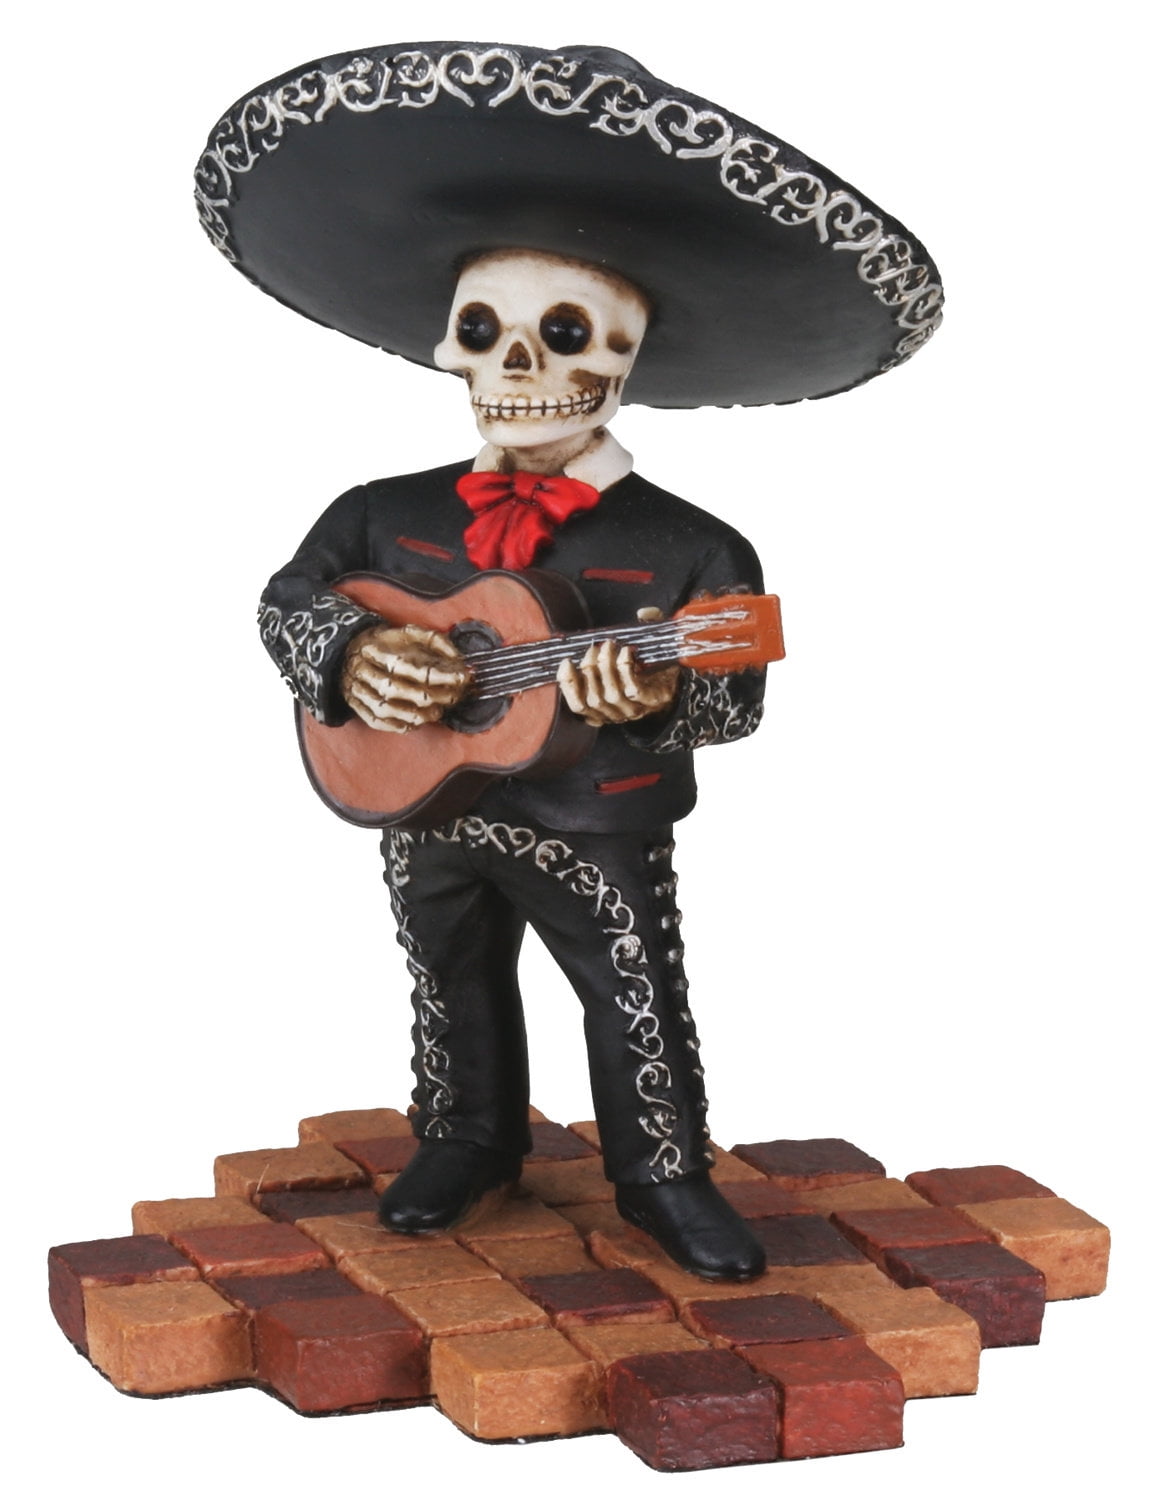 Details about   Day of the Dead Skeleton Mariachi Trumpet Player Figurine Dia de Los Muertos 